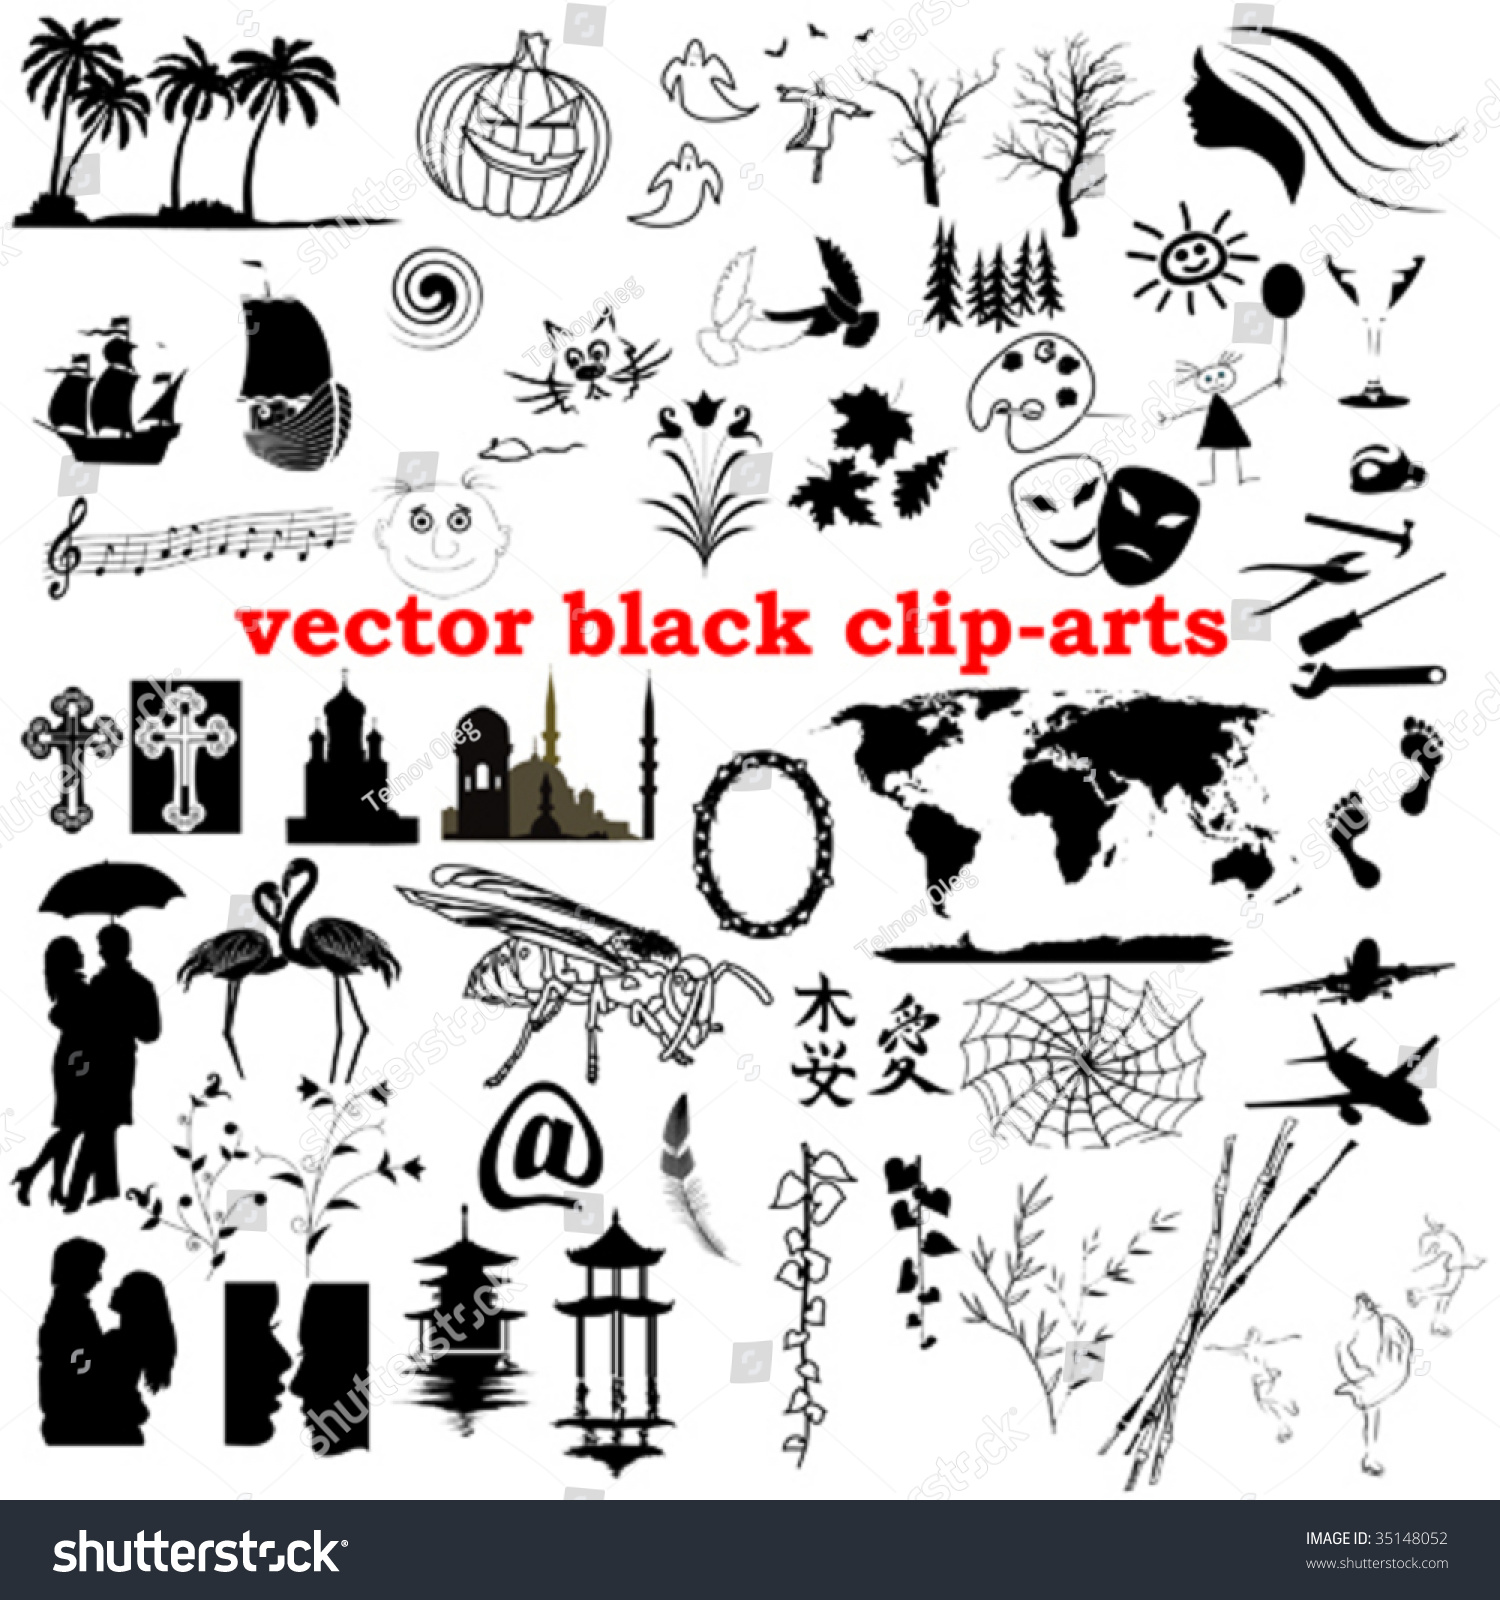 clipart vector collection - photo #35